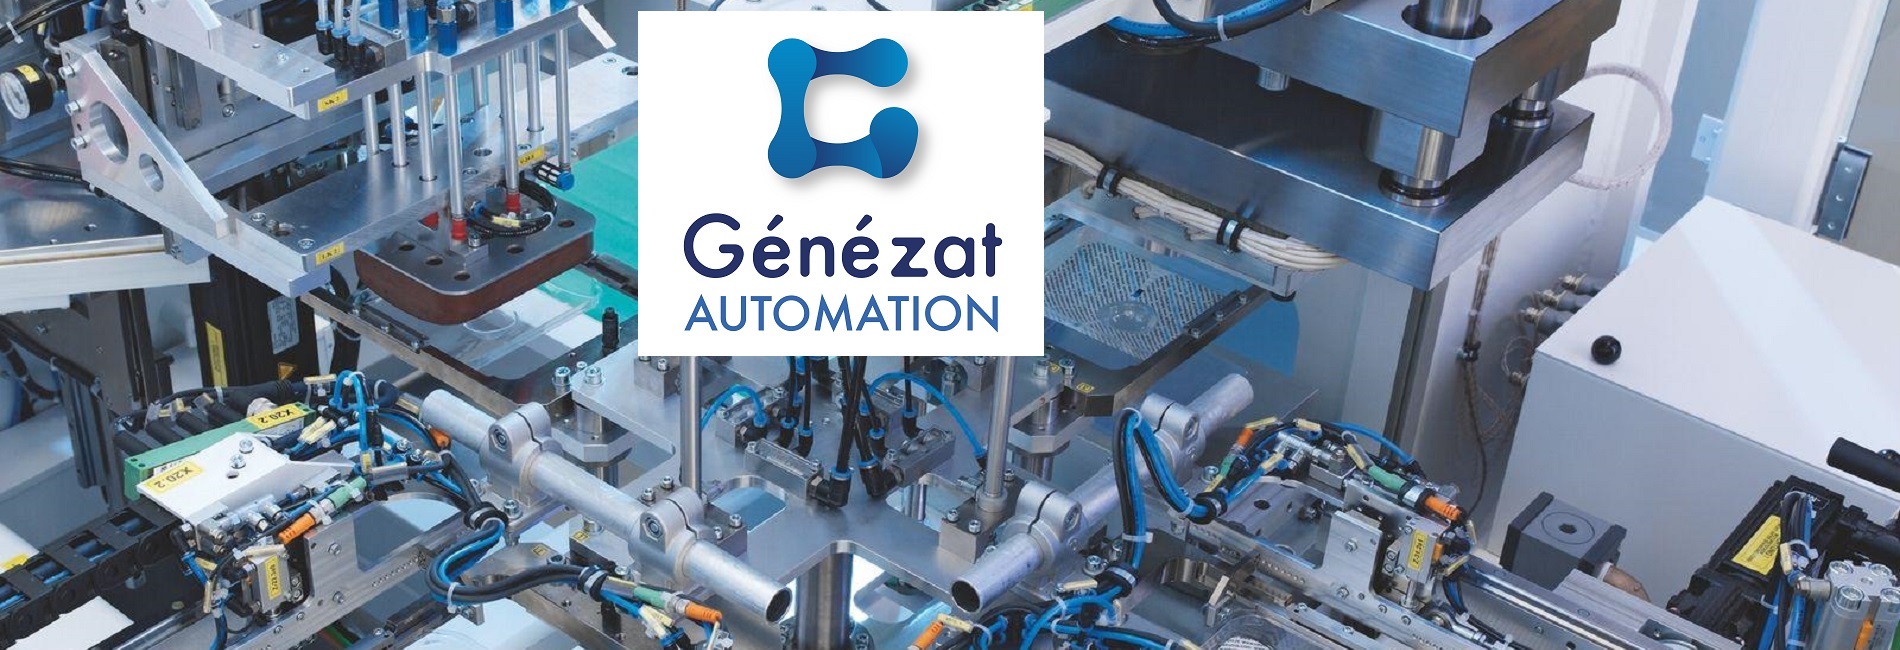 genezat automation